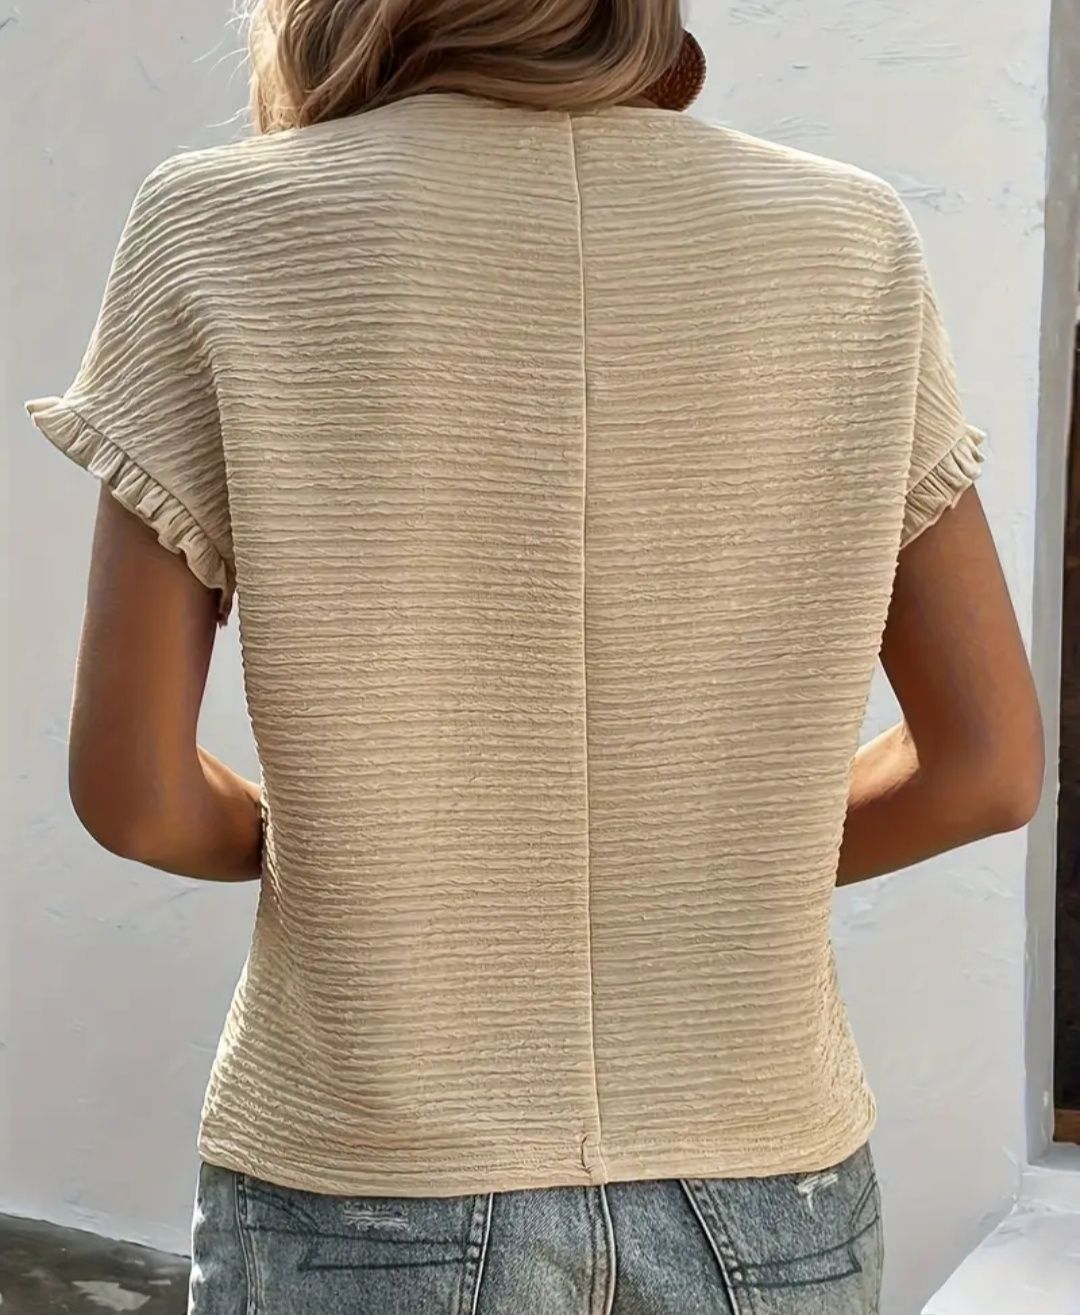 Solidna swobodna bluzka damska plus size r 4/5 XL morelowa beżowa